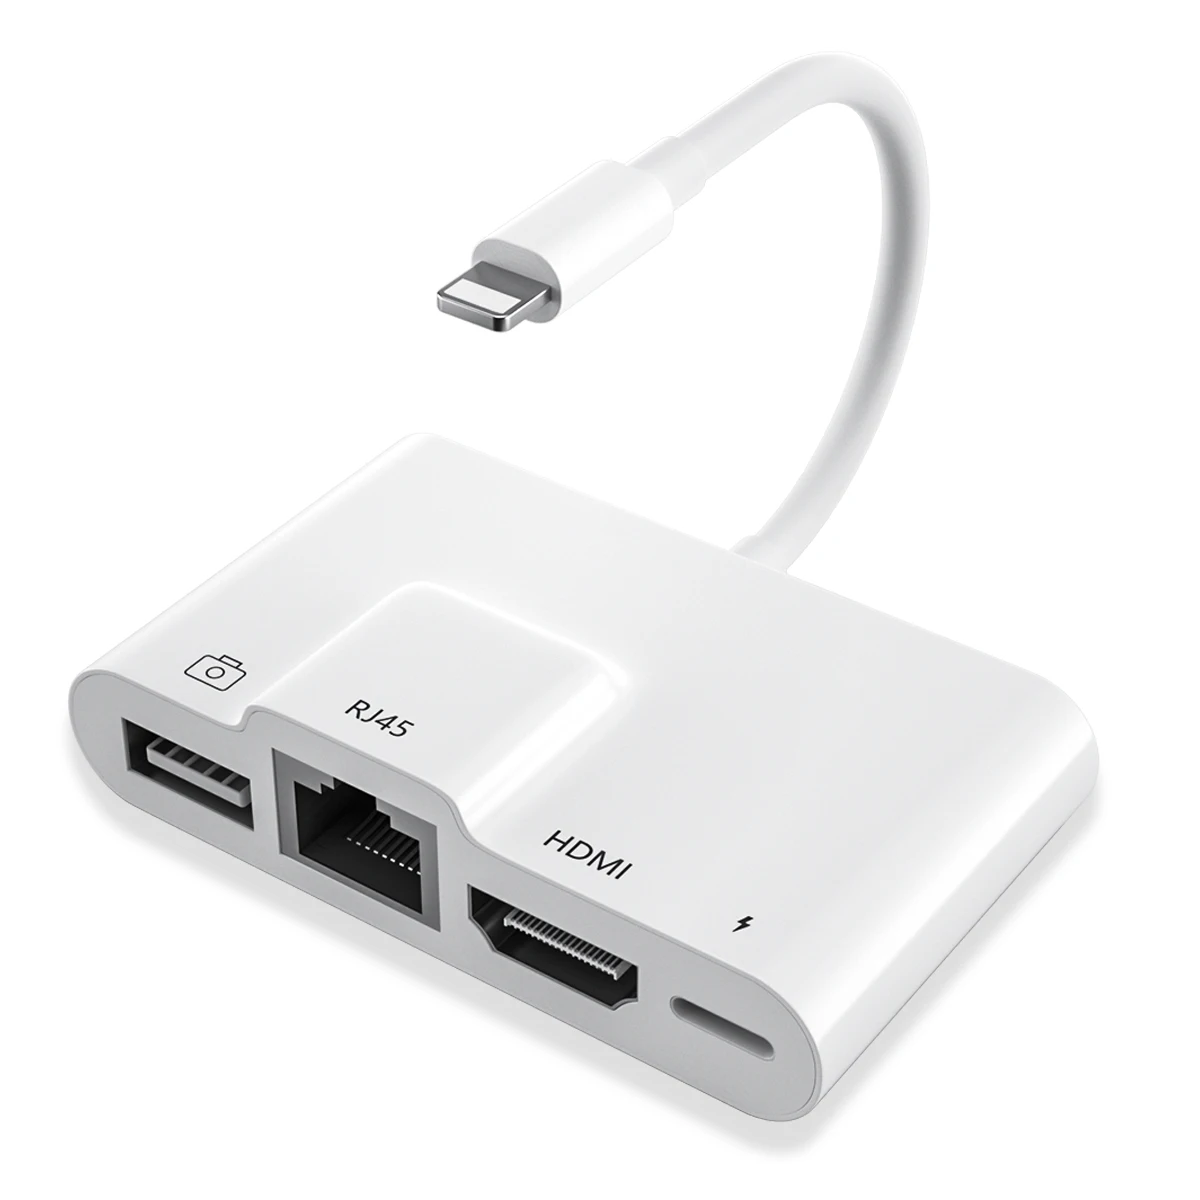 

Lighting To OTG Card Reader Adaptor USB Rj45 Ethernet Connector HDMI-Compatible 4K Digital AV Adapter for iPhone, White